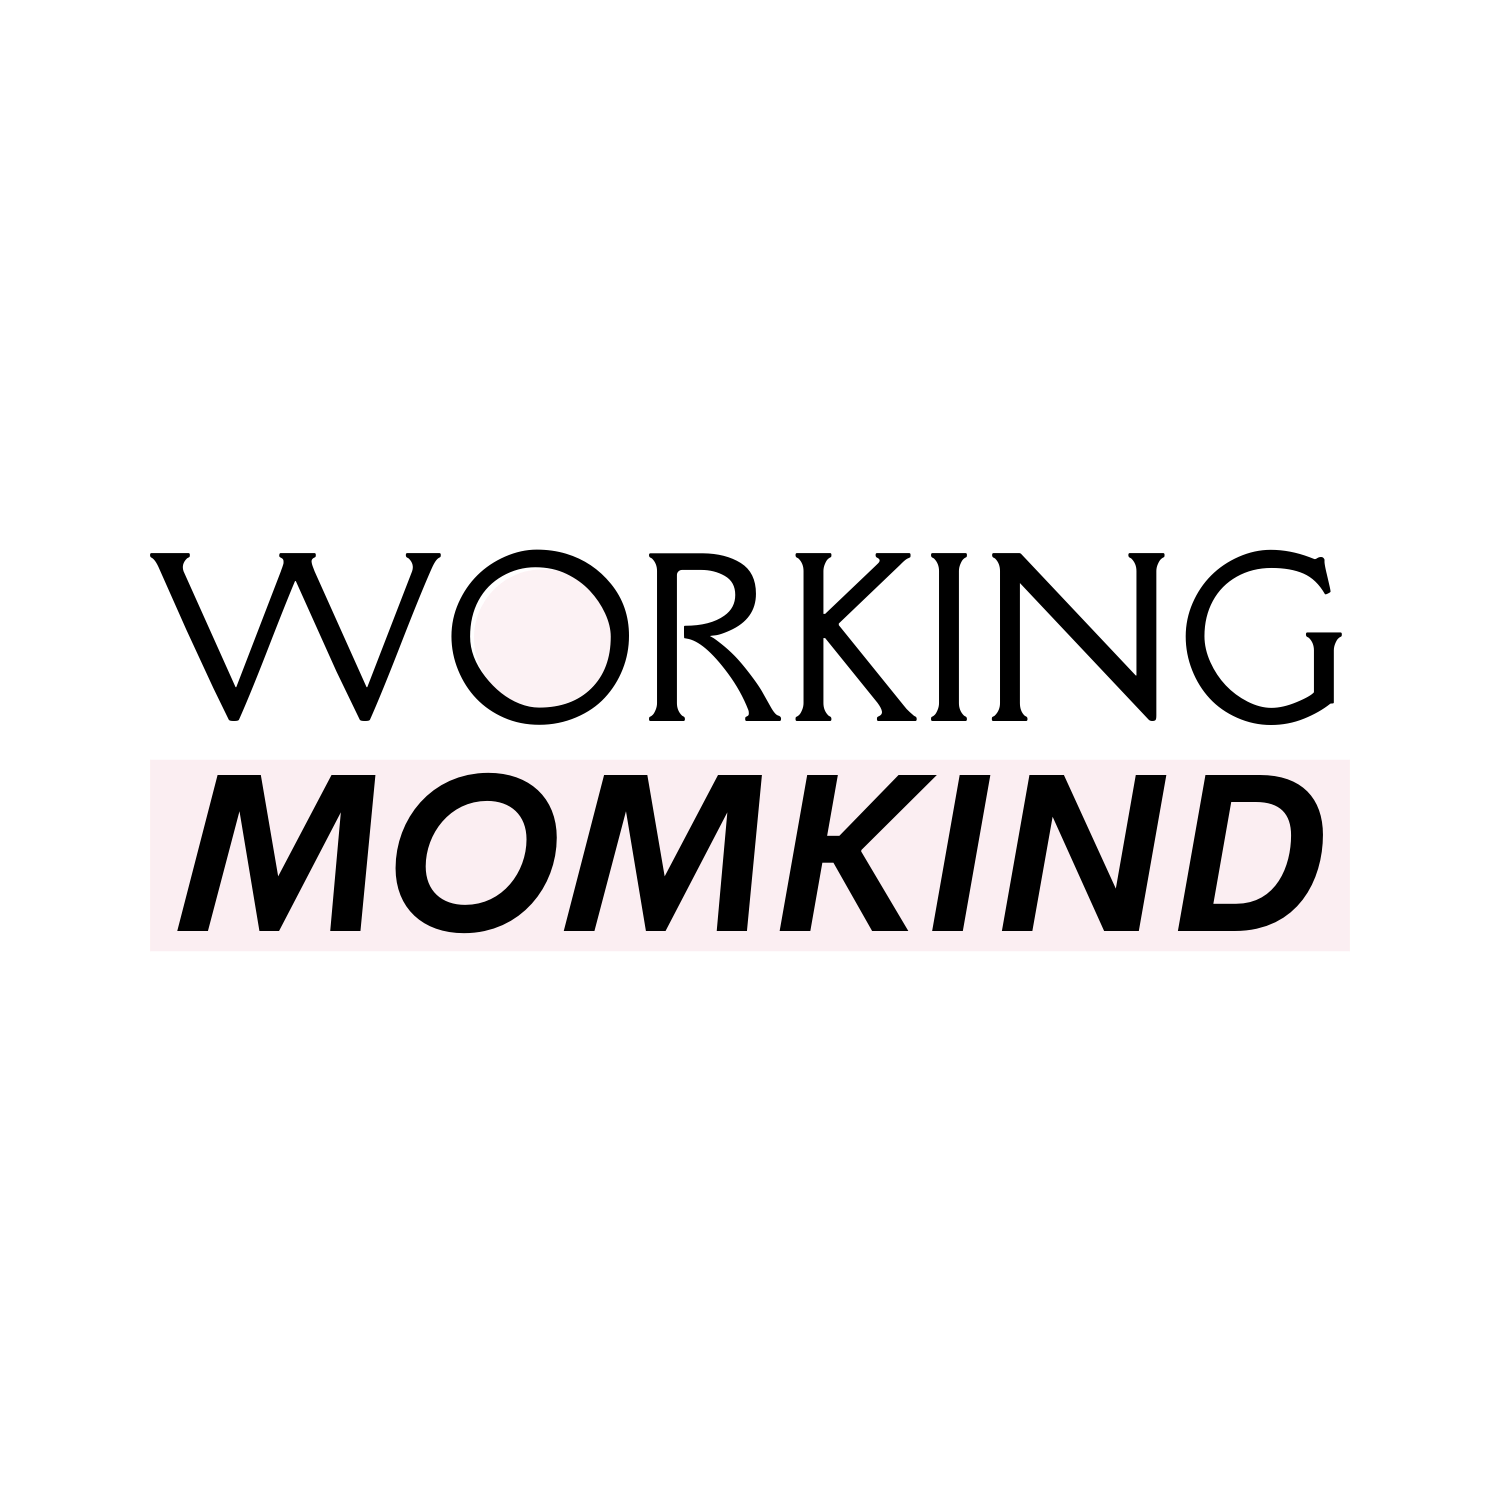 Working Momkind